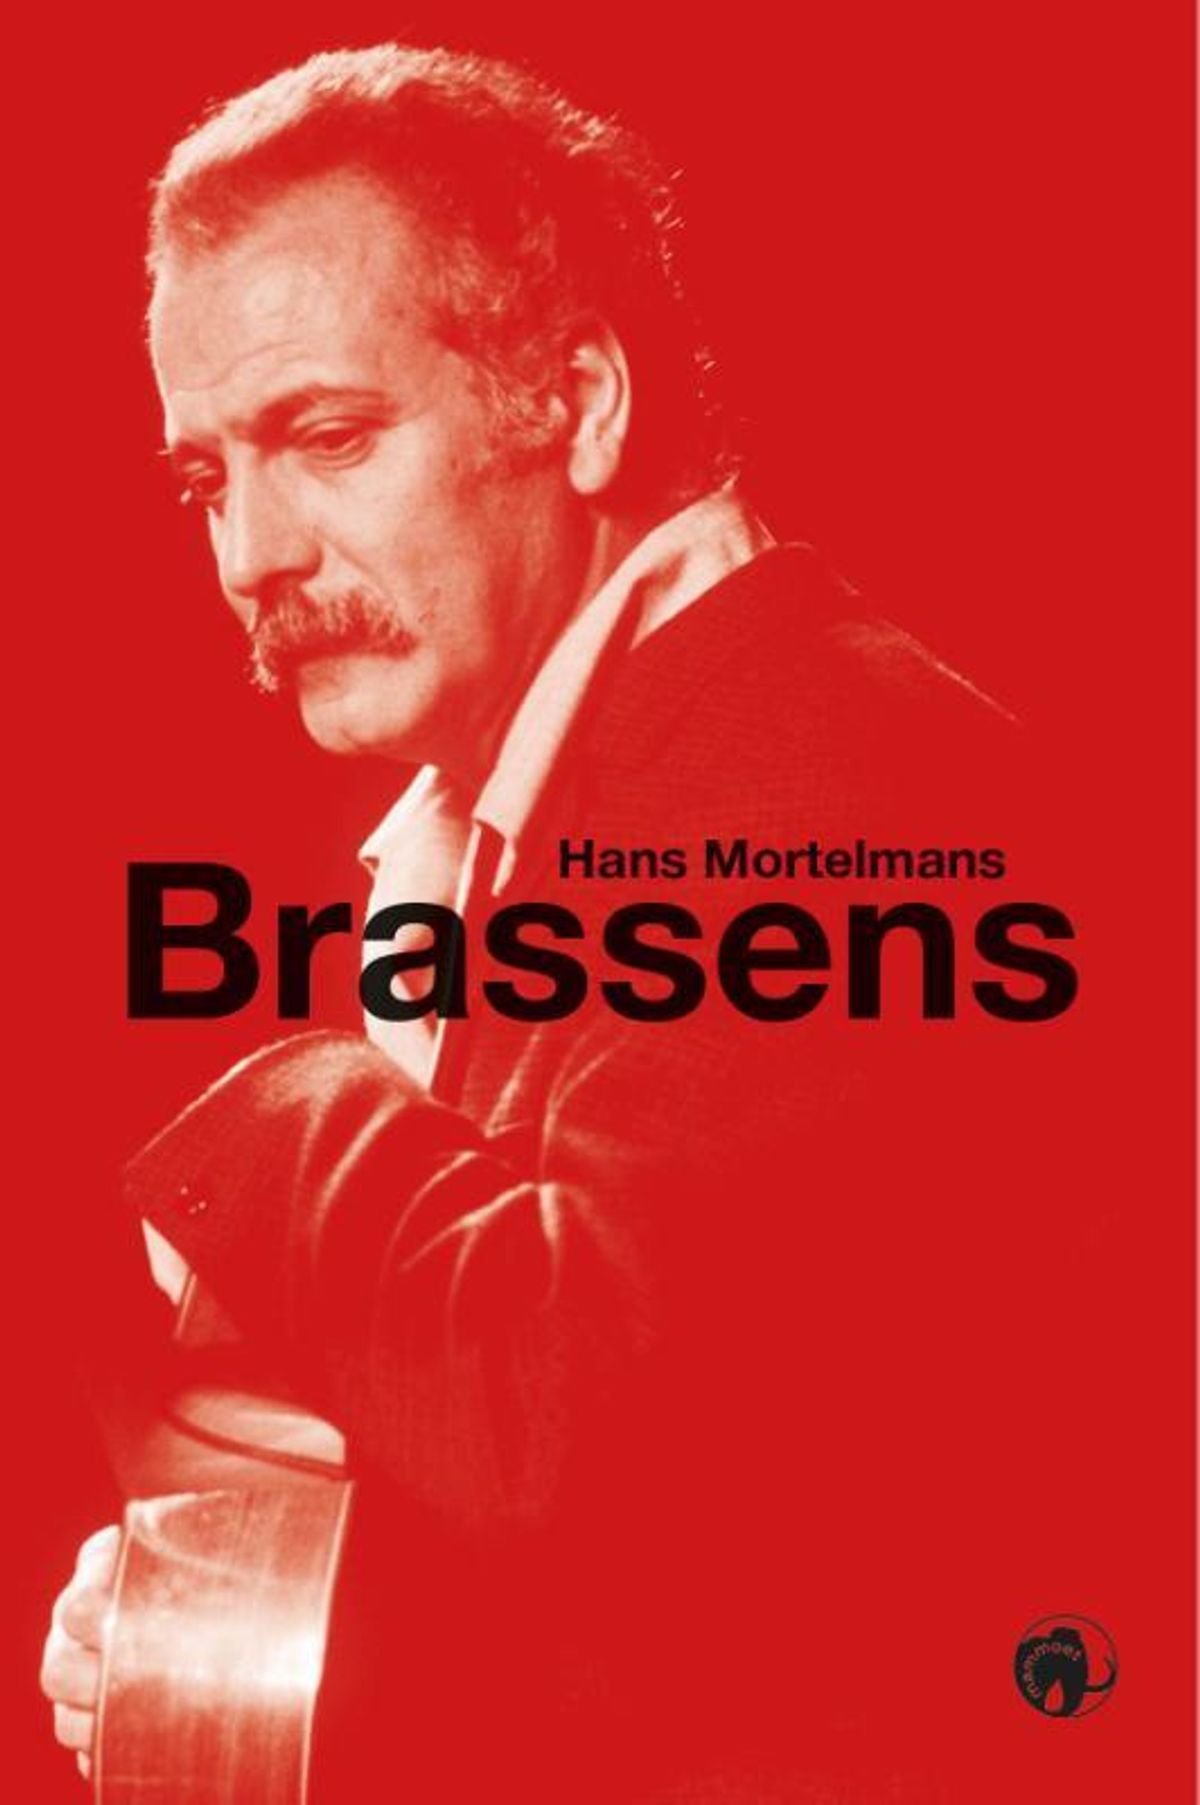 Hans Mortelmans - 'Brassens'